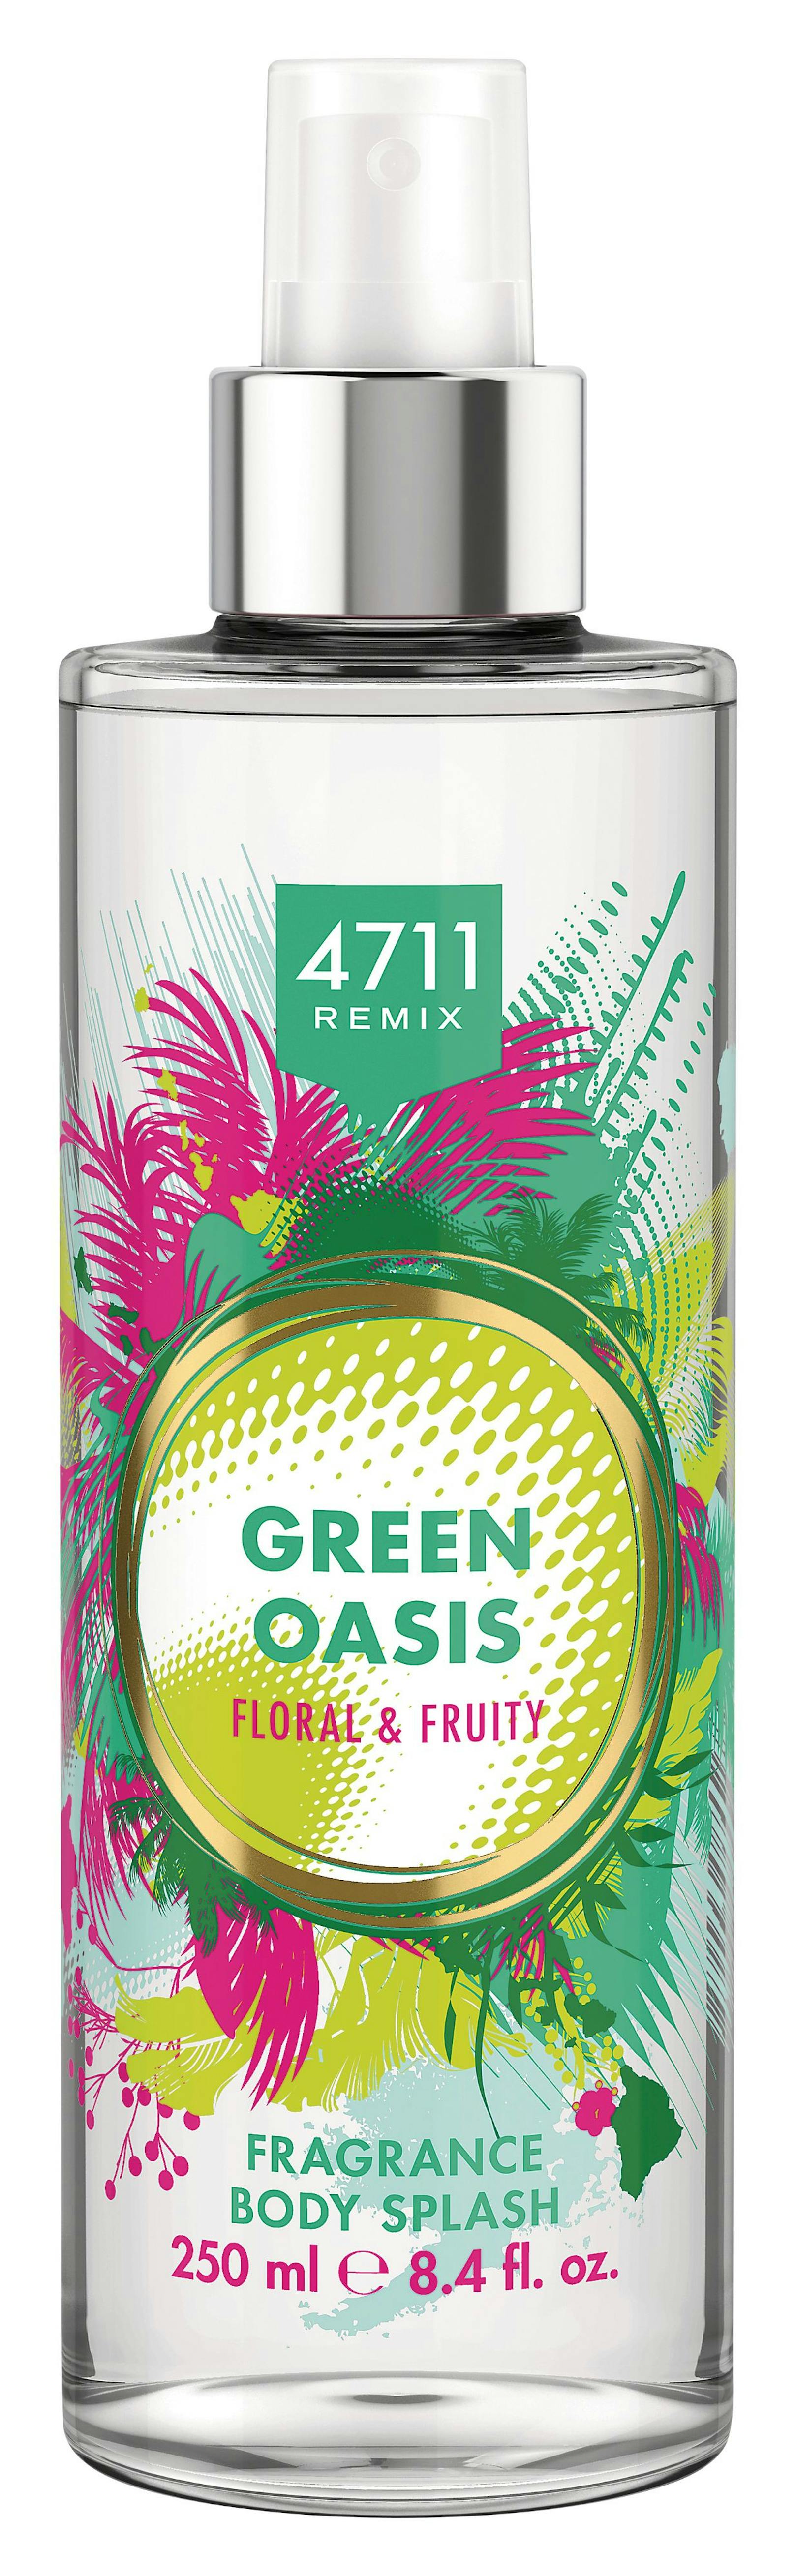 4711 Remix Green Oasis – Body Splash